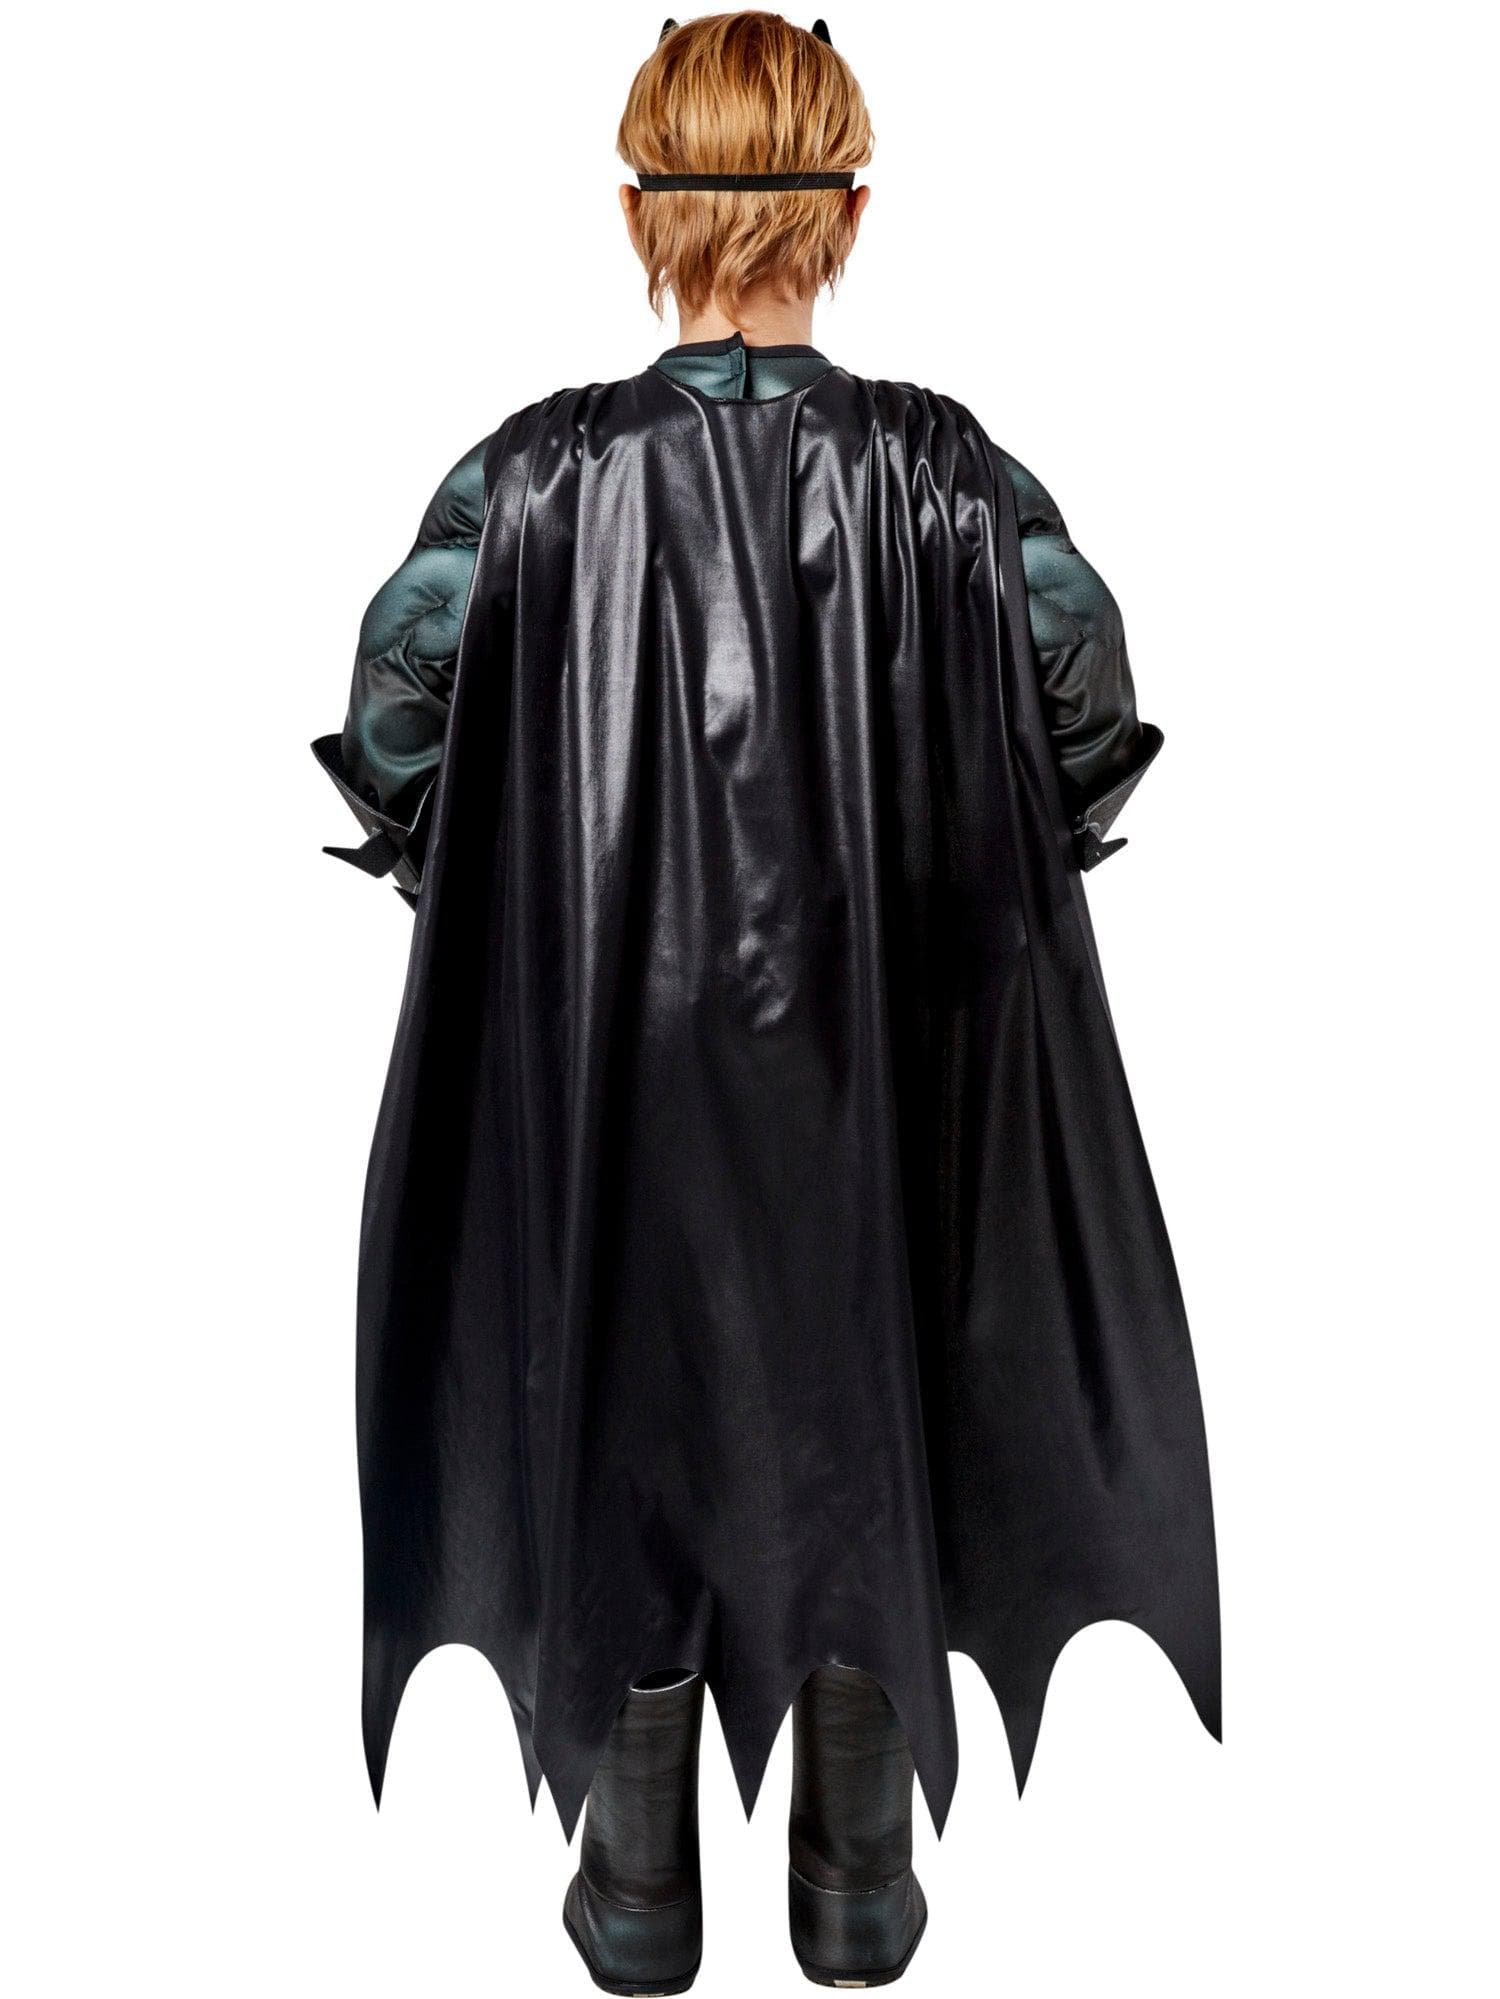 Batman Child Costume - costumes.com